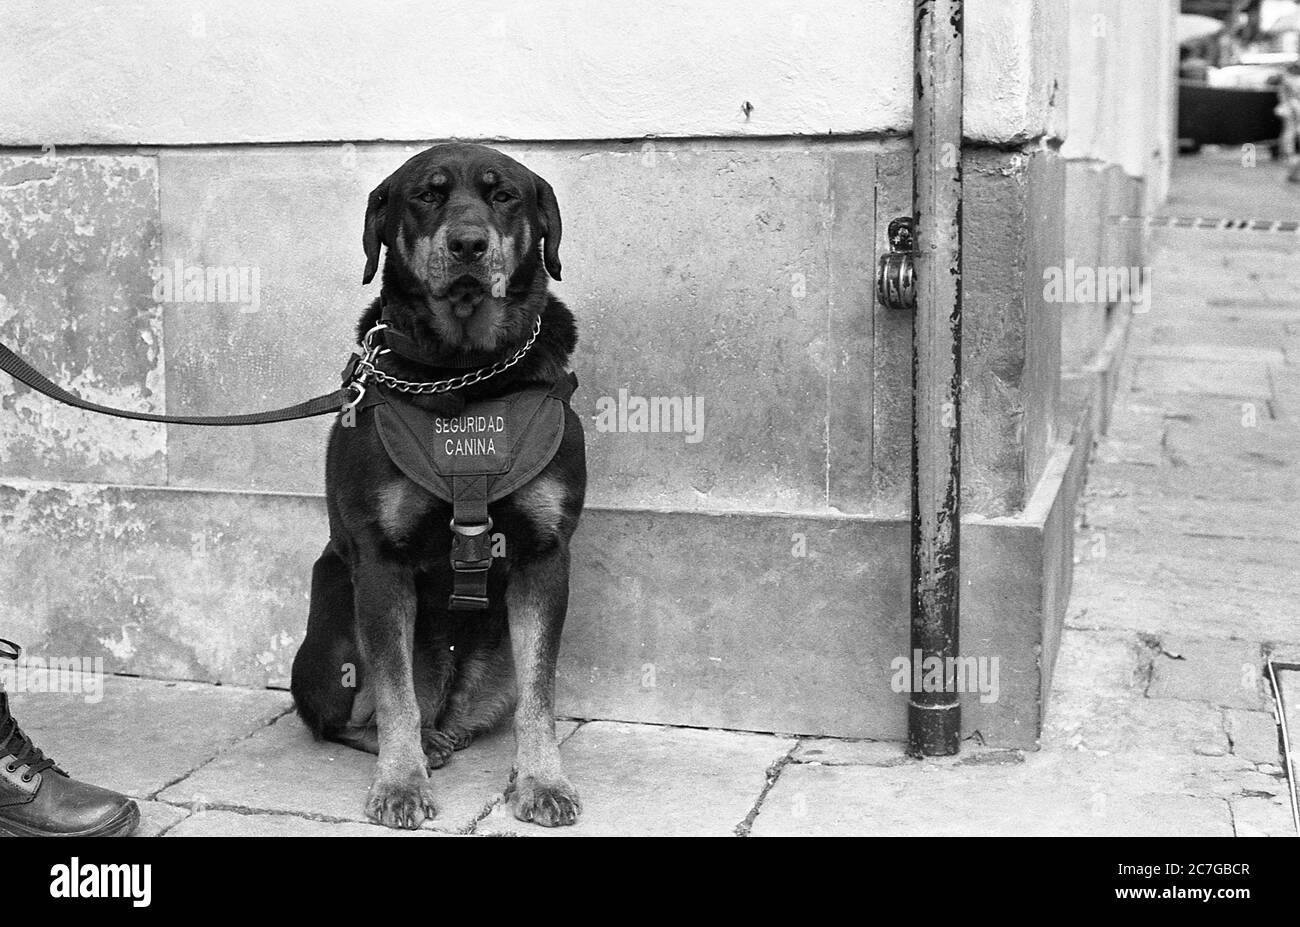 Grey scale shot of a black dog on a leash sitting on the sidewalk Stock Photo